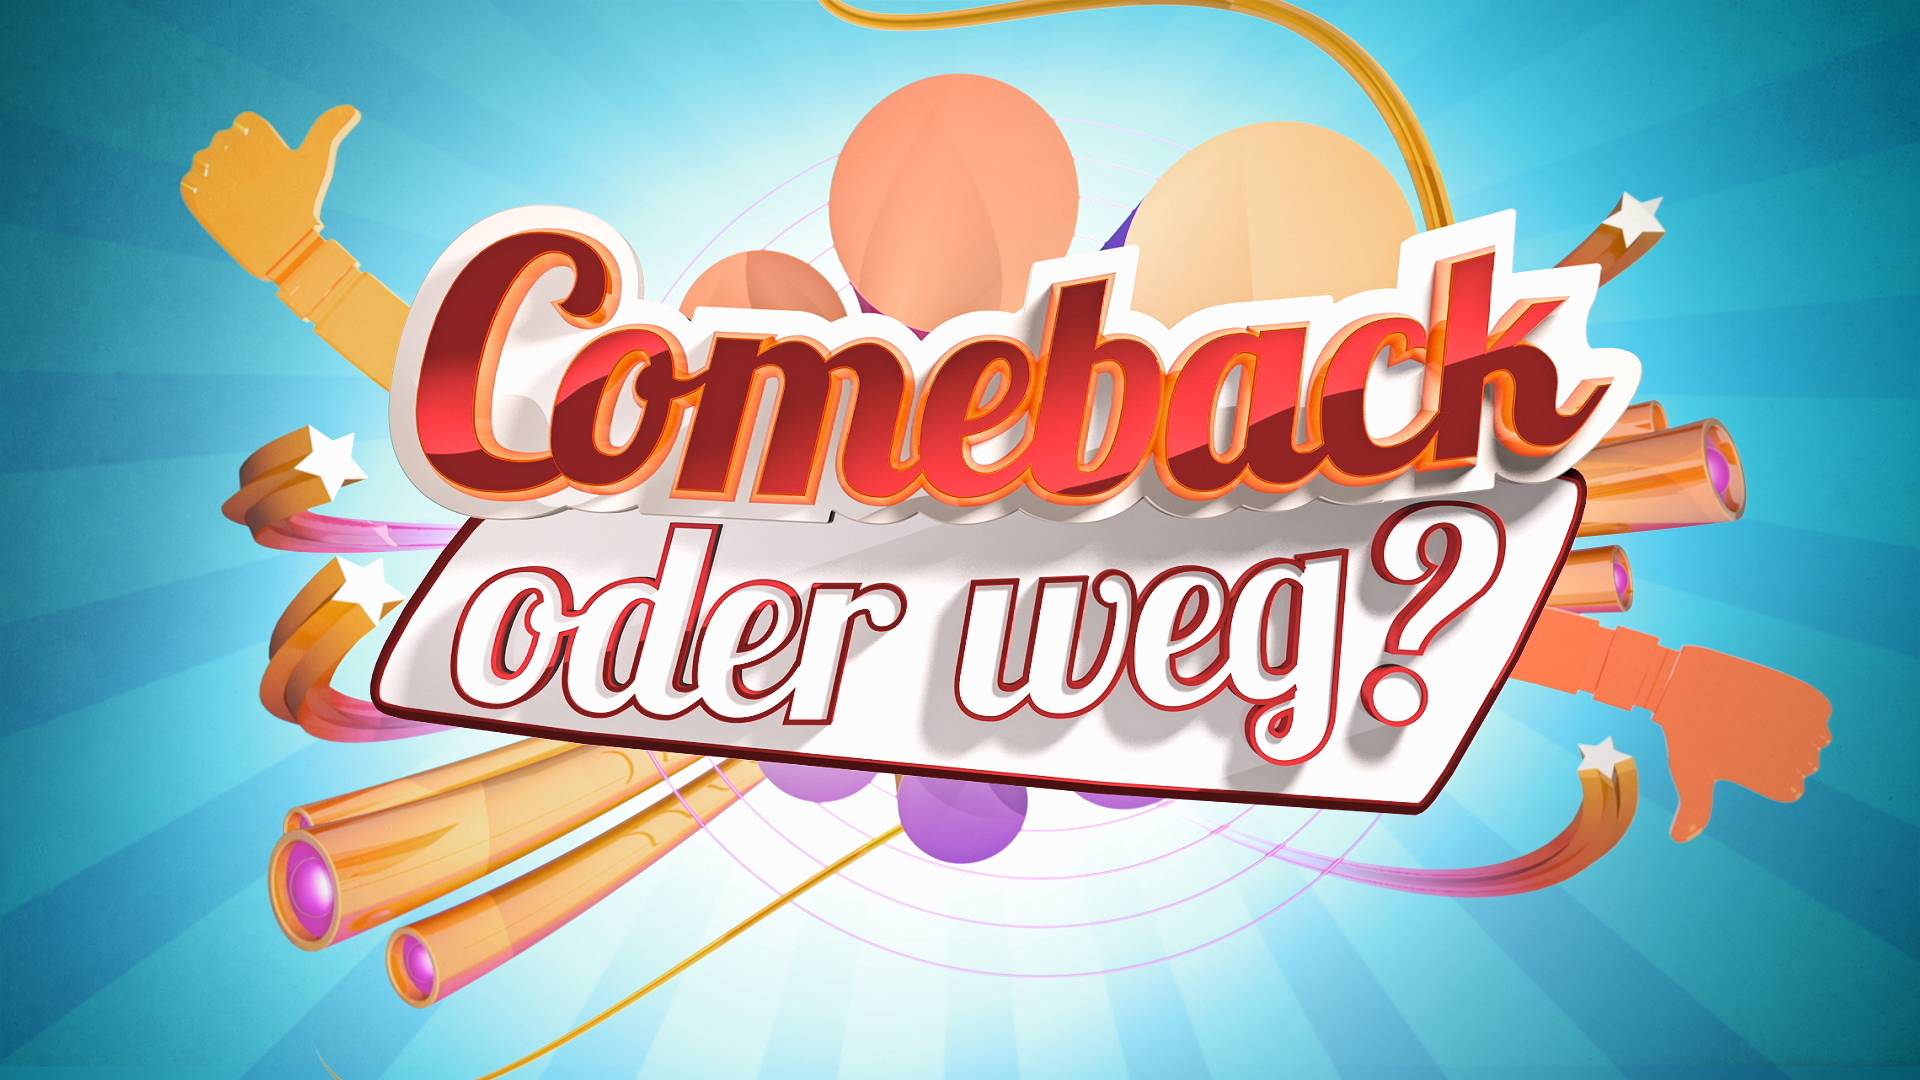 Weg Logo - comeback oder weg?, rtl - dibido.tv gmbh